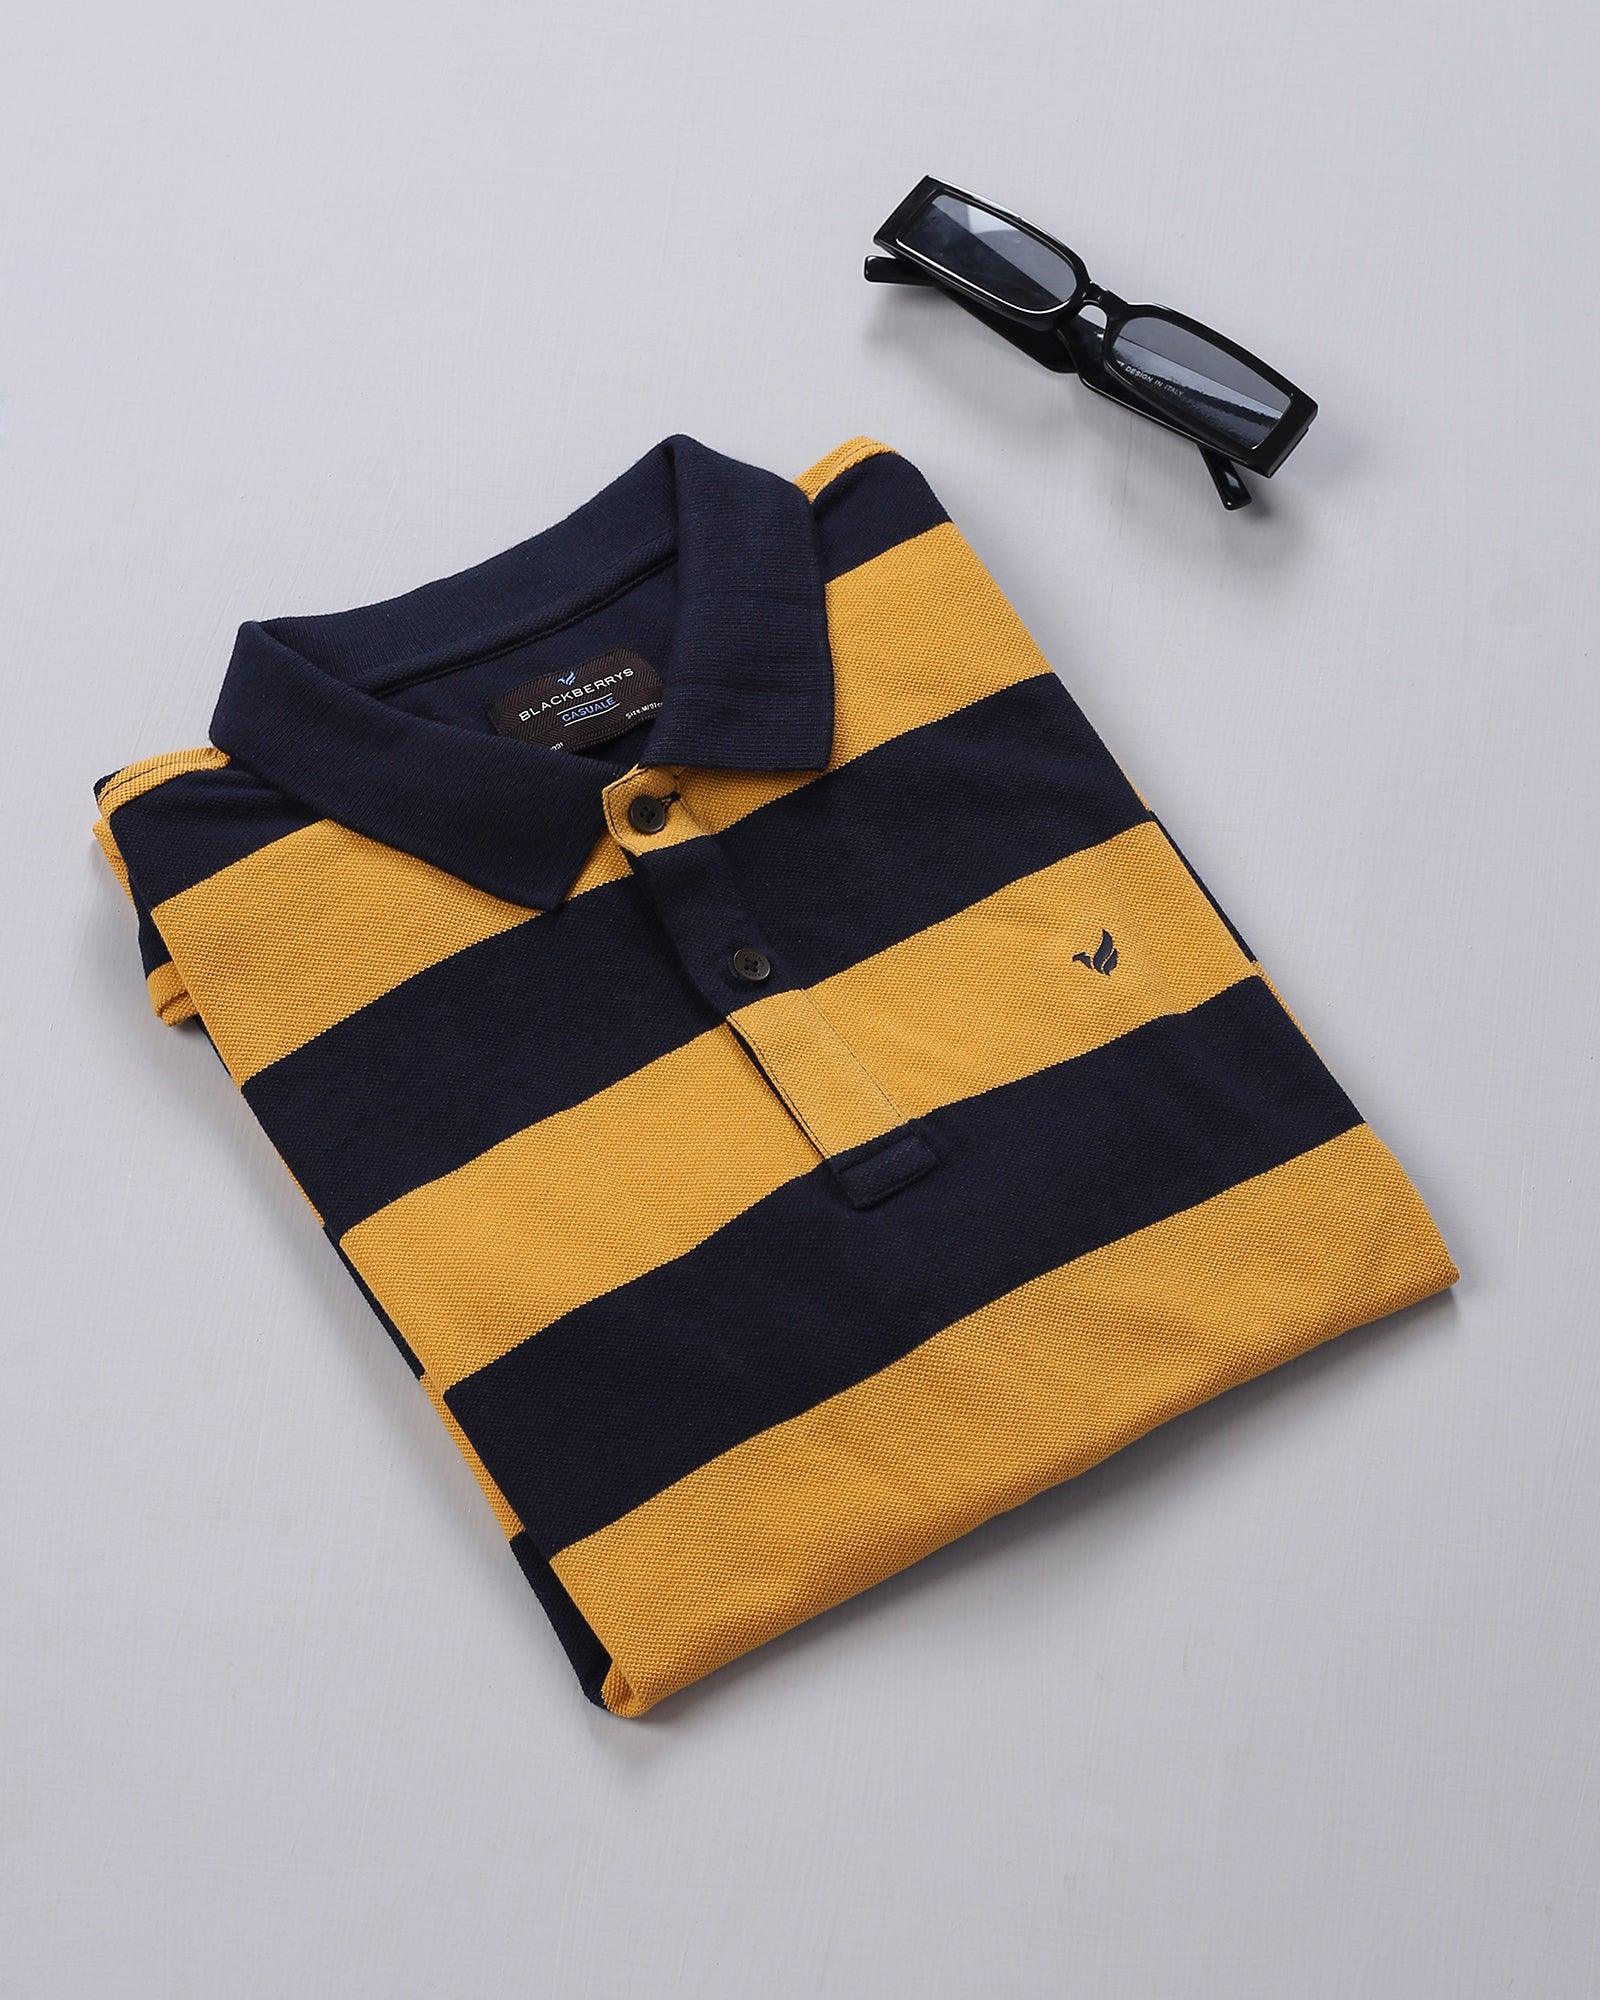 Polo Yellow Striped T Shirt - Kobe